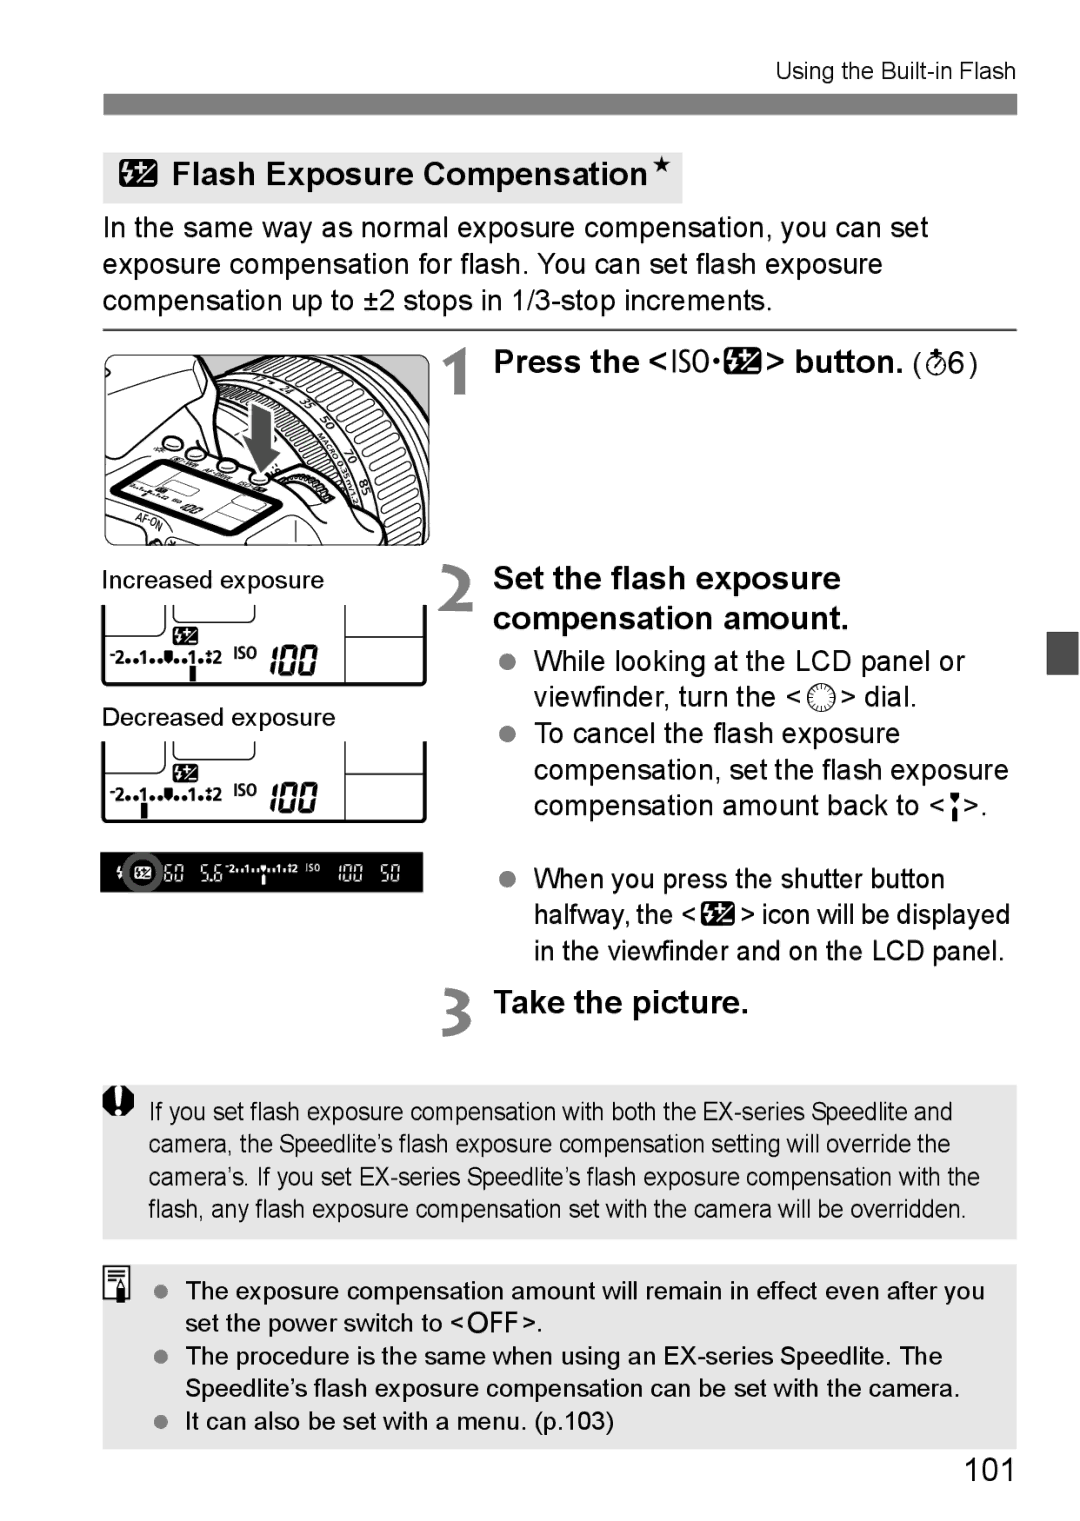 Canon EOS40D instruction manual Flash Exposure CompensationN, Set the flash exposure compensation amount, 101 